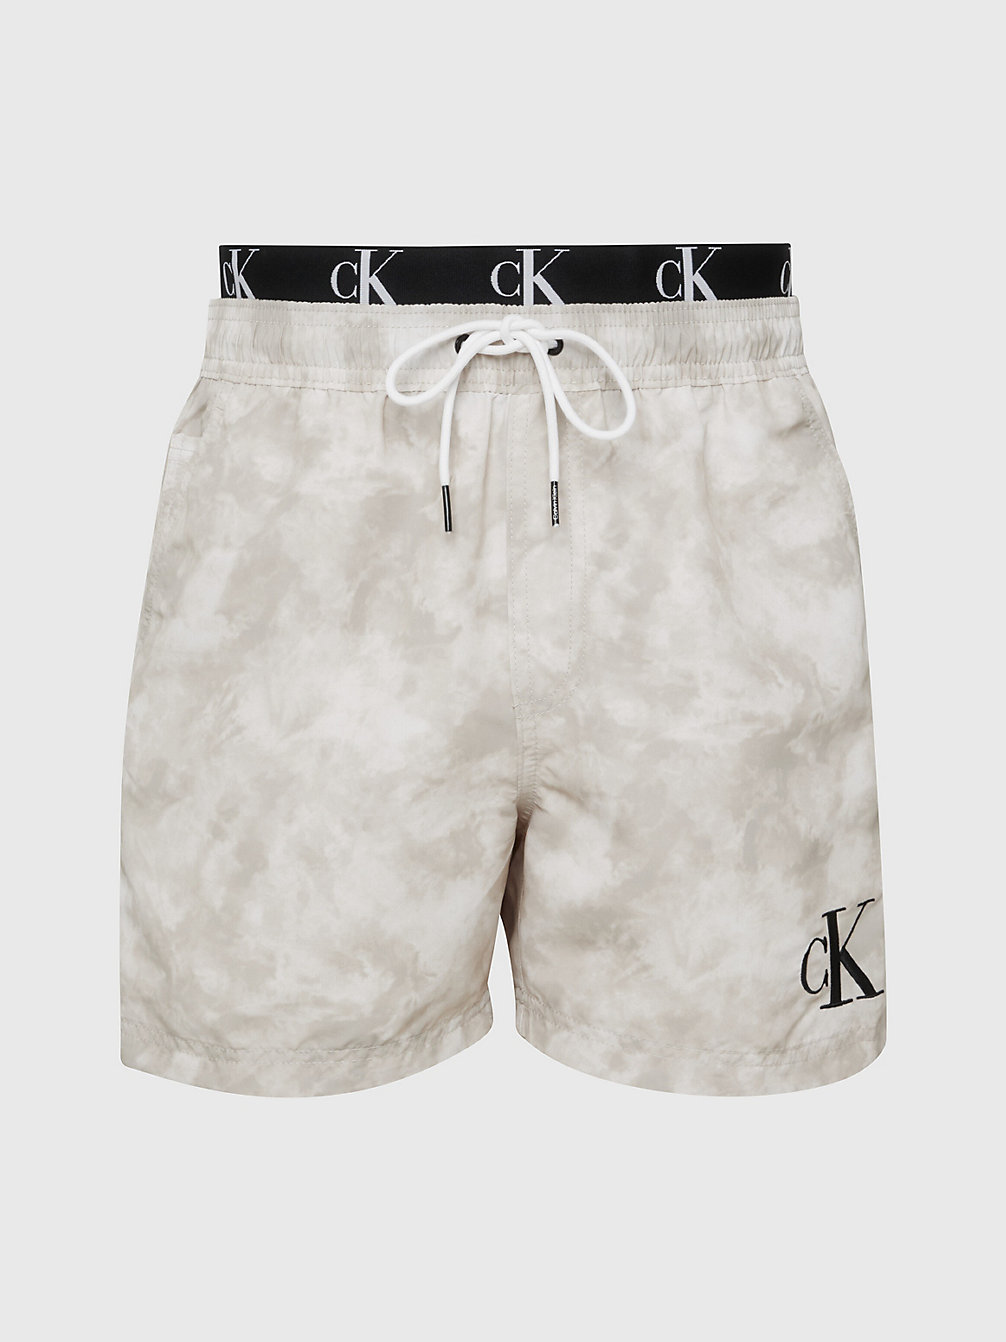 CK TIE DYE KHAKI AOP Double Waistband Swim Shorts - CK Authentic undefined men Calvin Klein